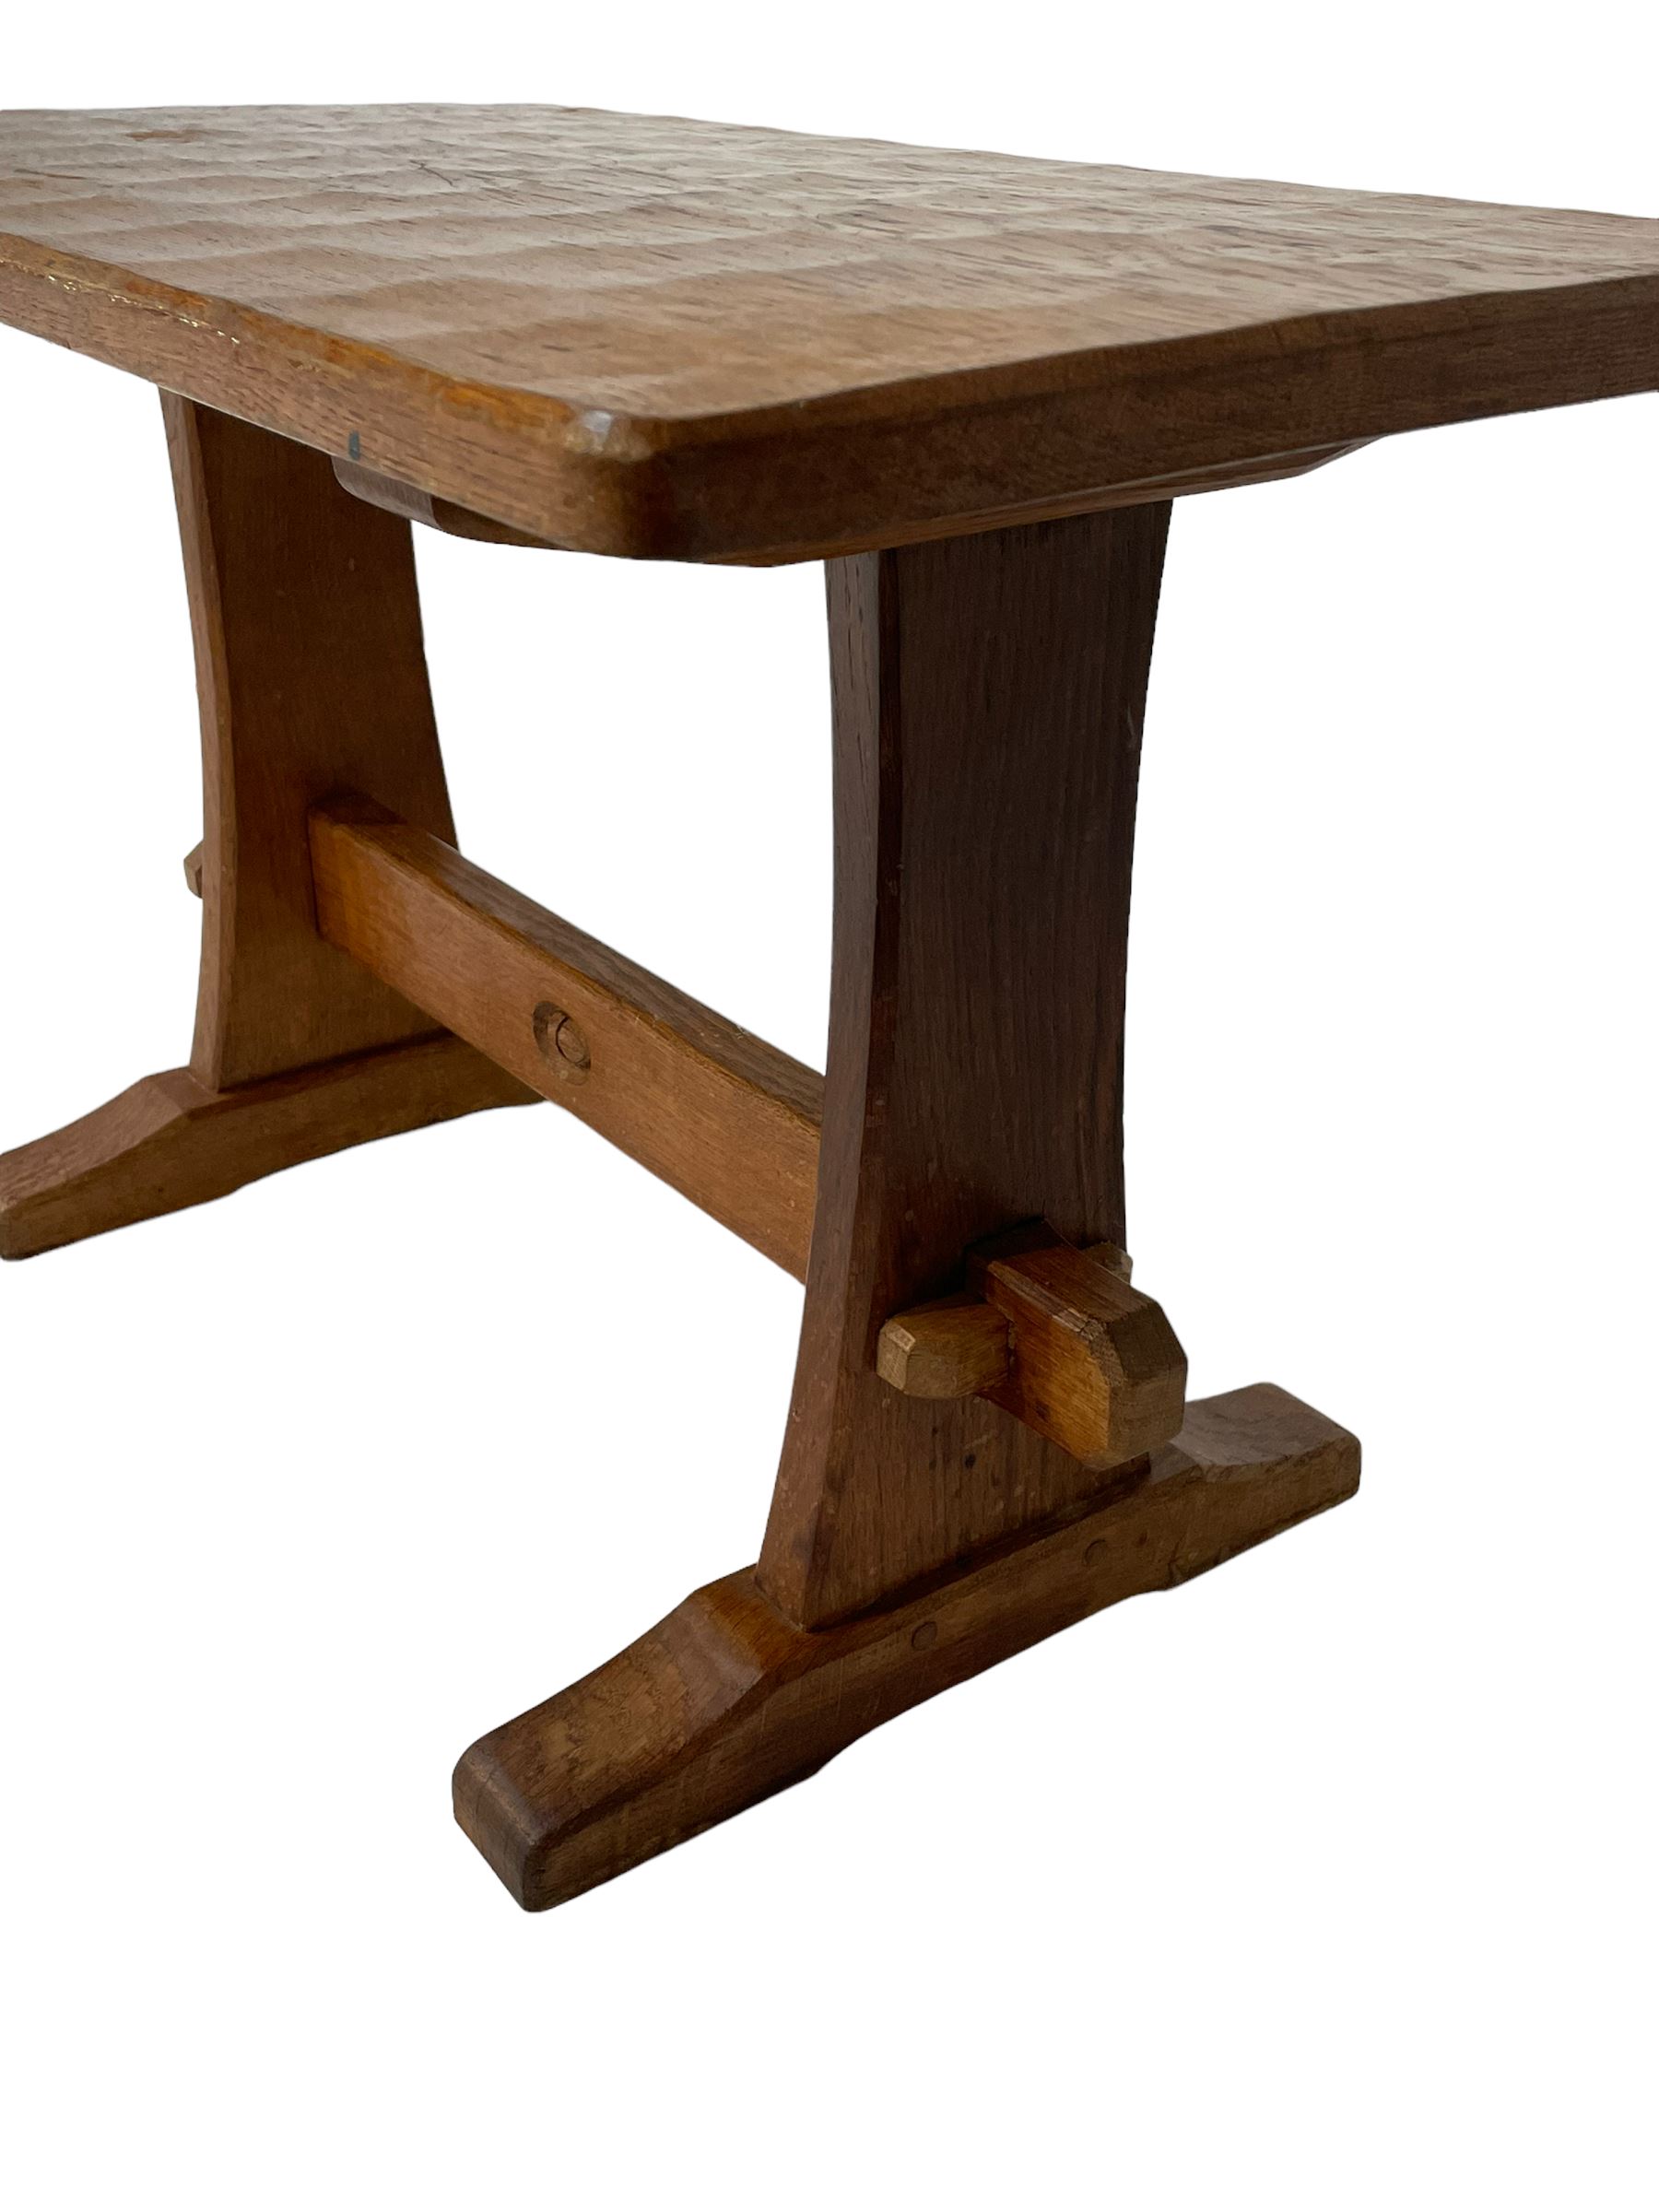 Acornman - rectangular adzed oak coffee table - Image 3 of 8